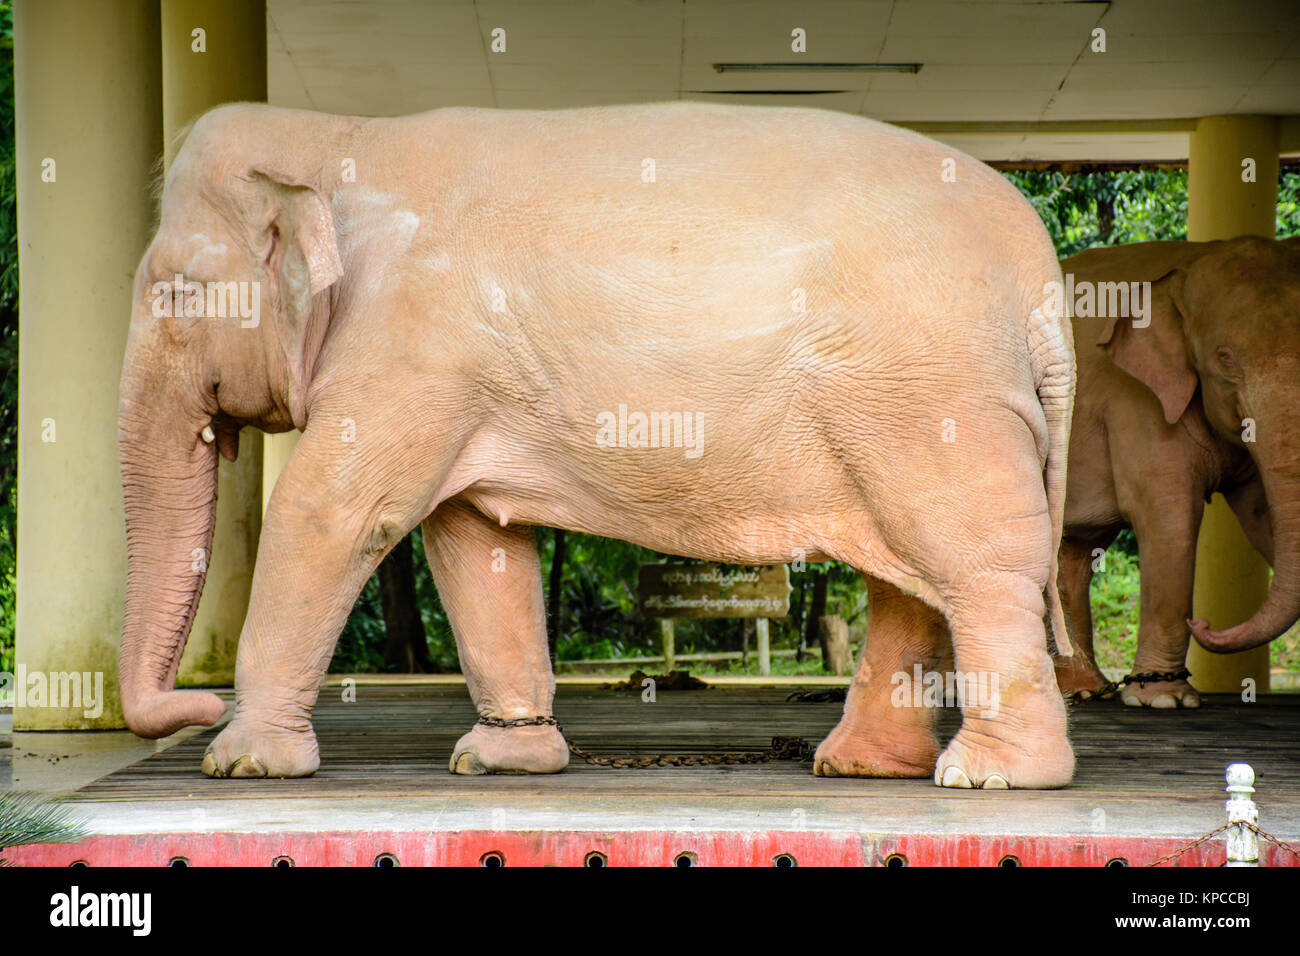 https://c8.alamy.com/comp/KPCCBJ/white-elephant-in-min-dhama-hill-yangon-myanmar-july-2017-KPCCBJ.jpg